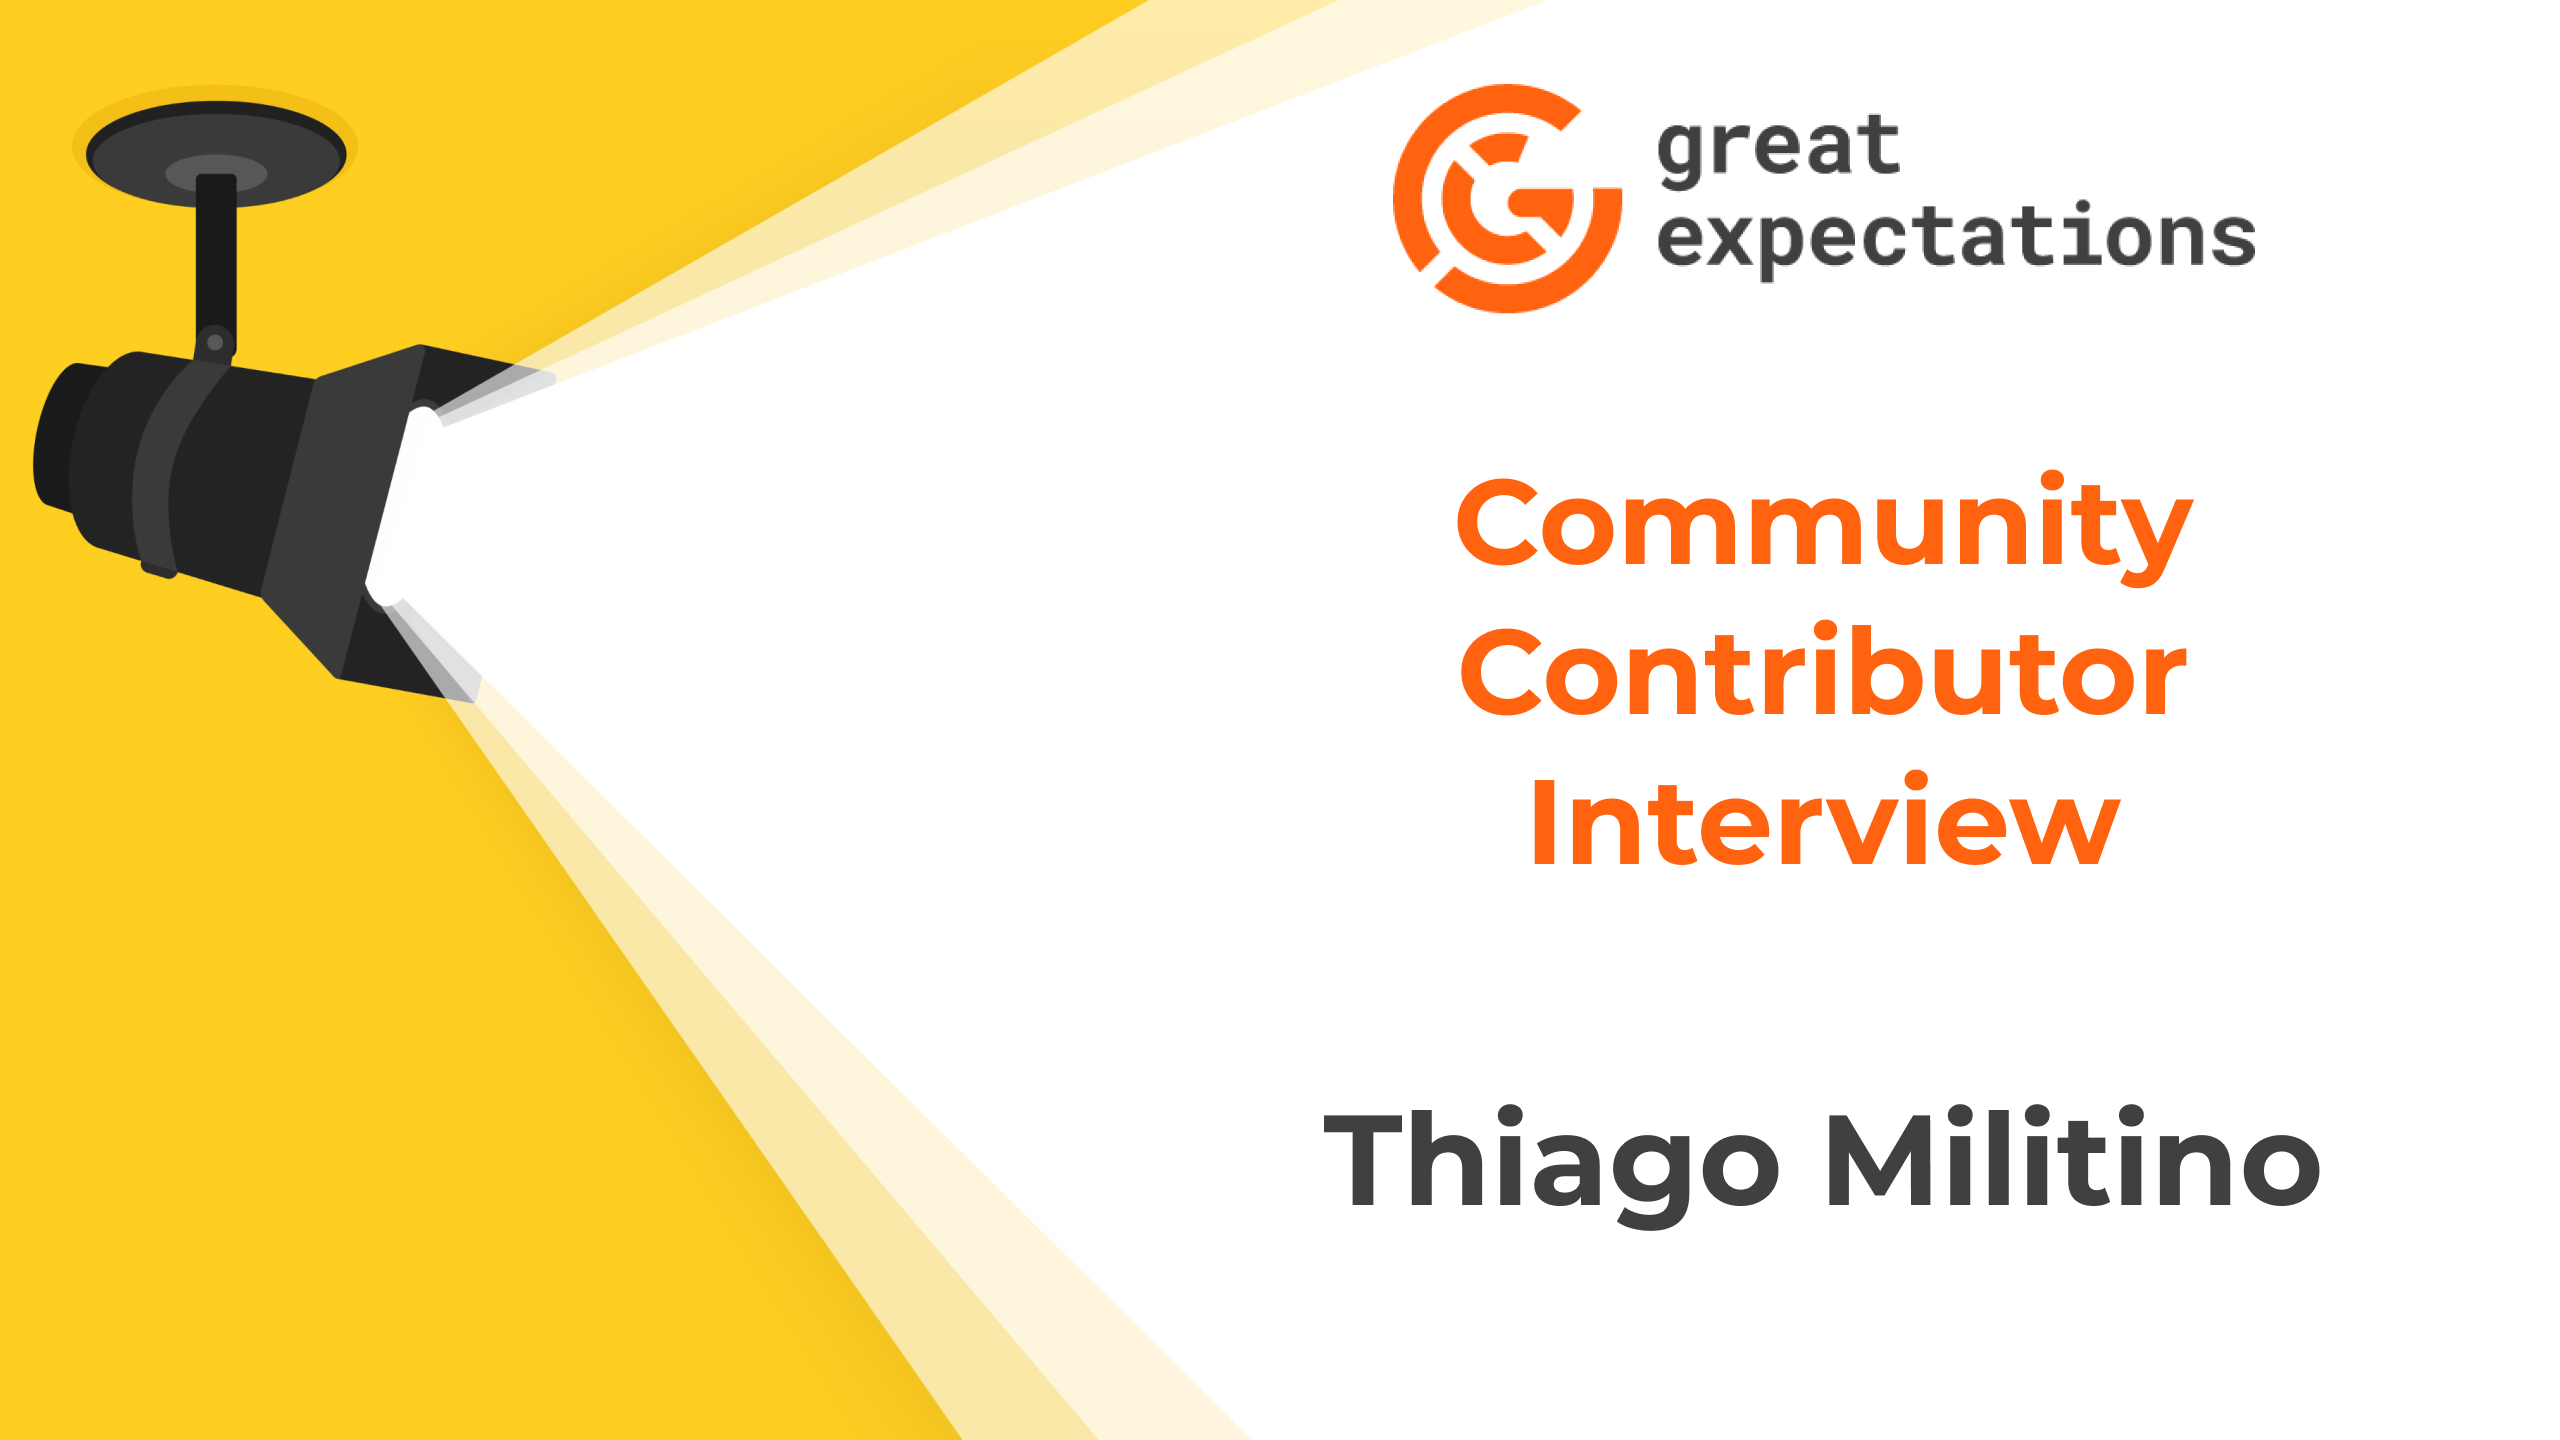 Community contributor interview cover card for Thiago Militino